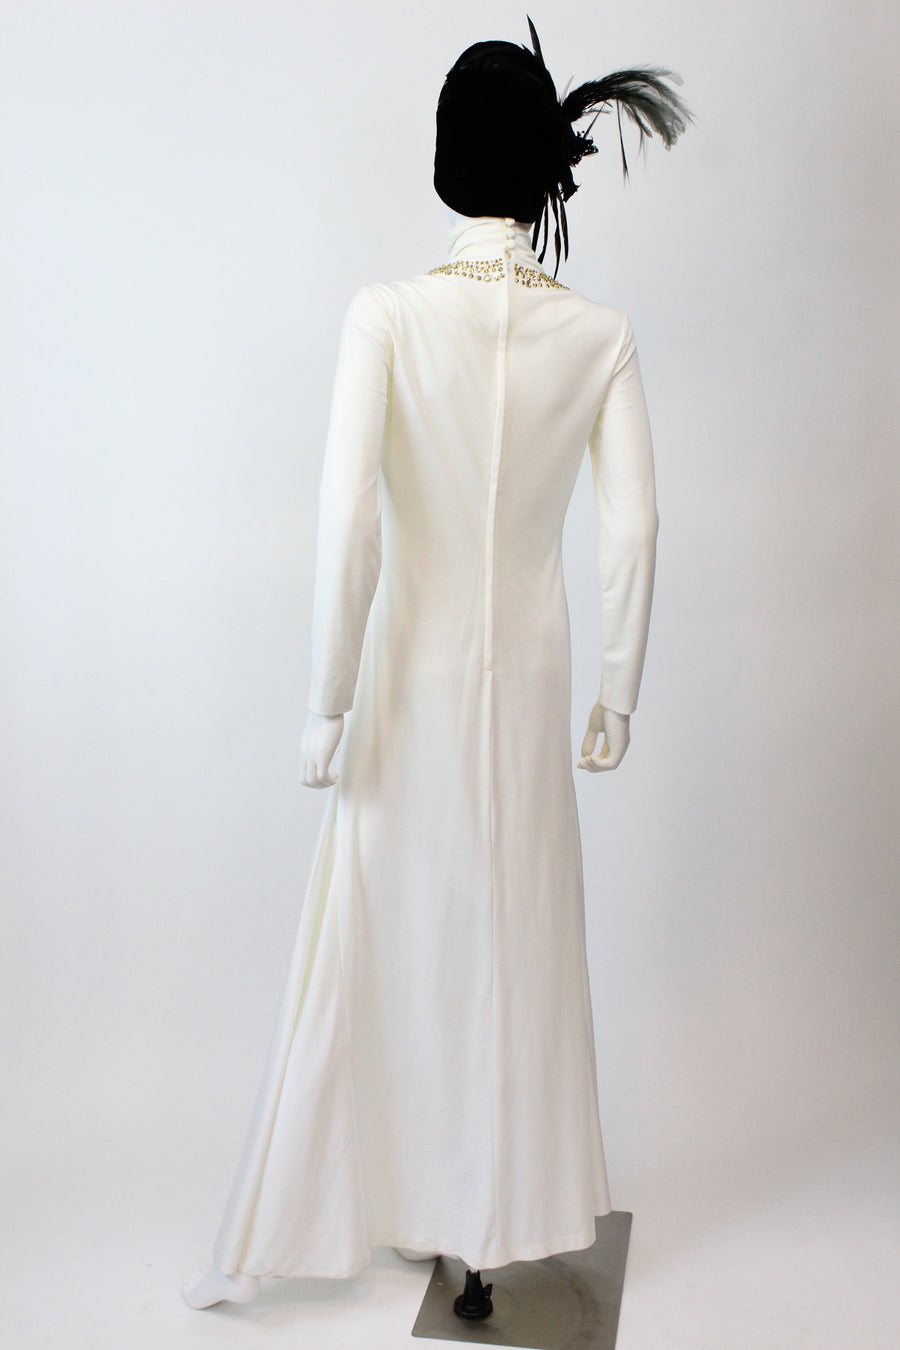 1970s STUDS and rhinestones gown dress medium large | new fall